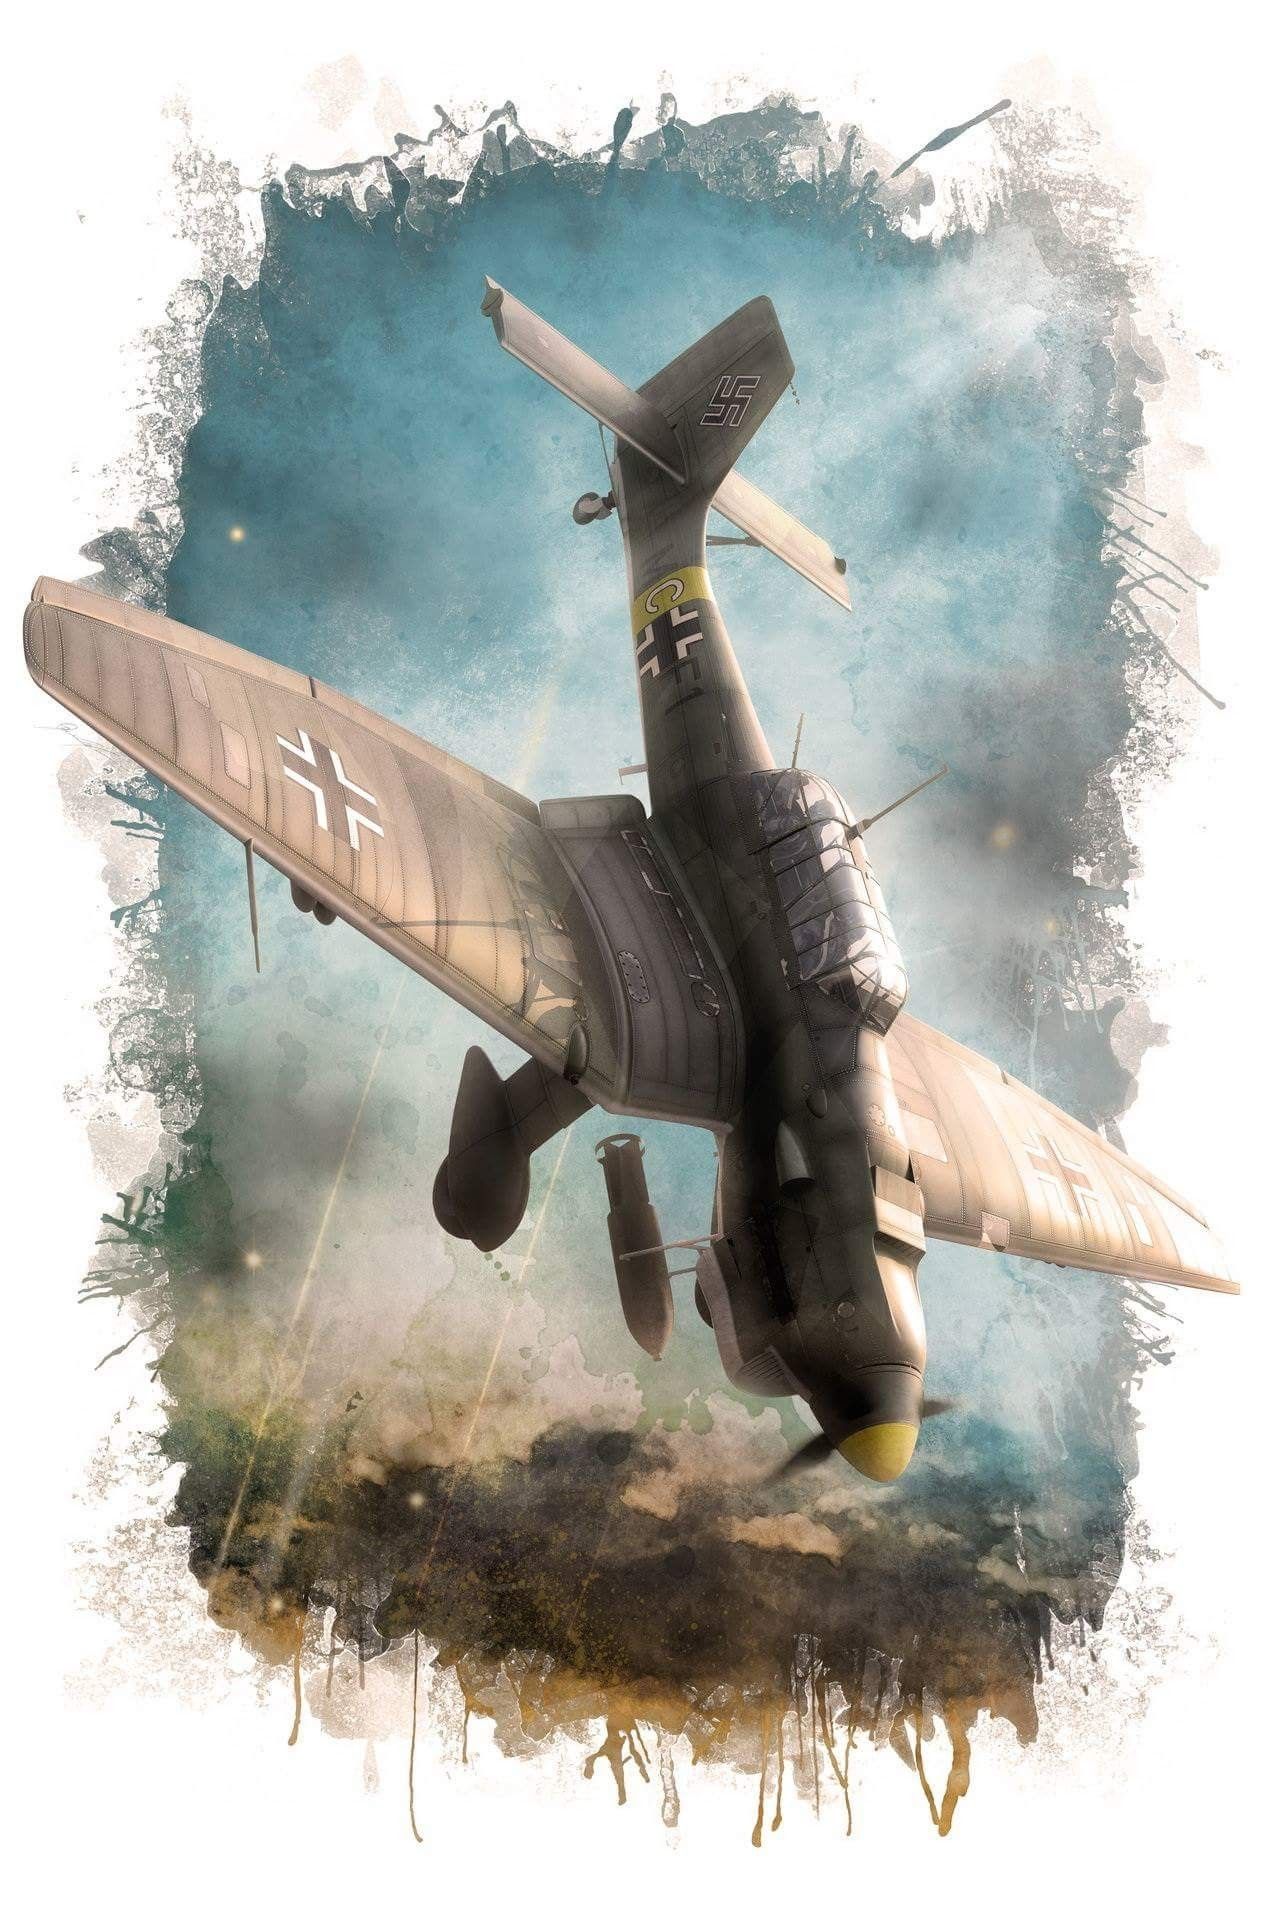 Junkers Ju 87 Stuka. Aircraft Art, Military Wallpaper, Aviation Art